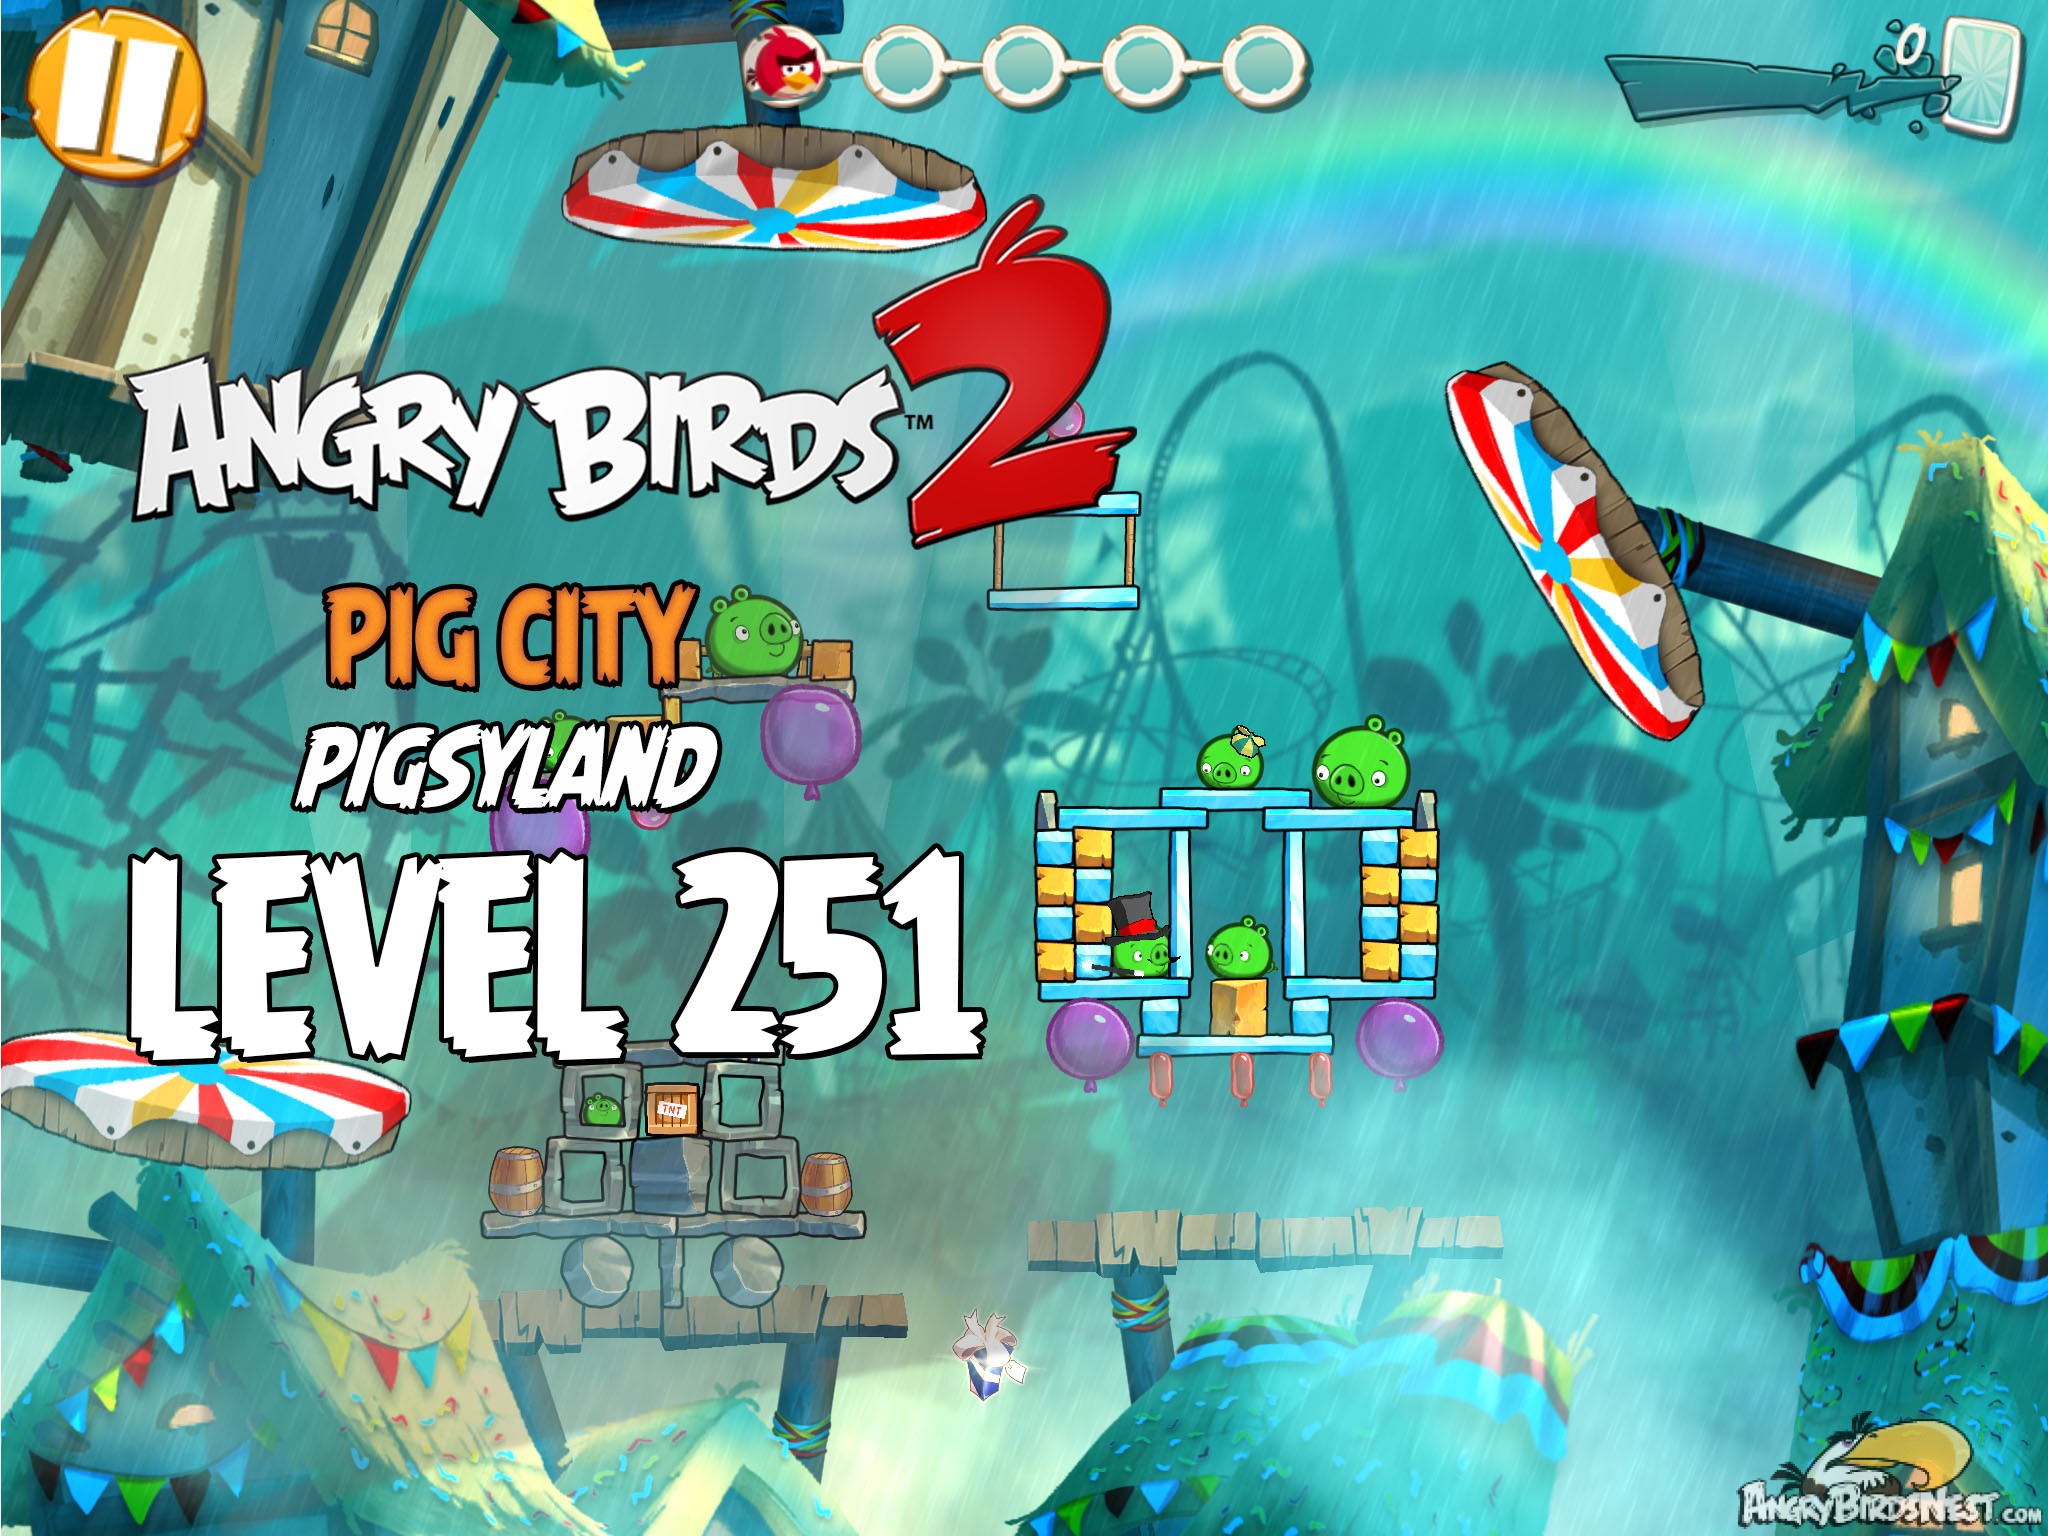 Angry Birds 2 Pig City Pigsyland Level 251